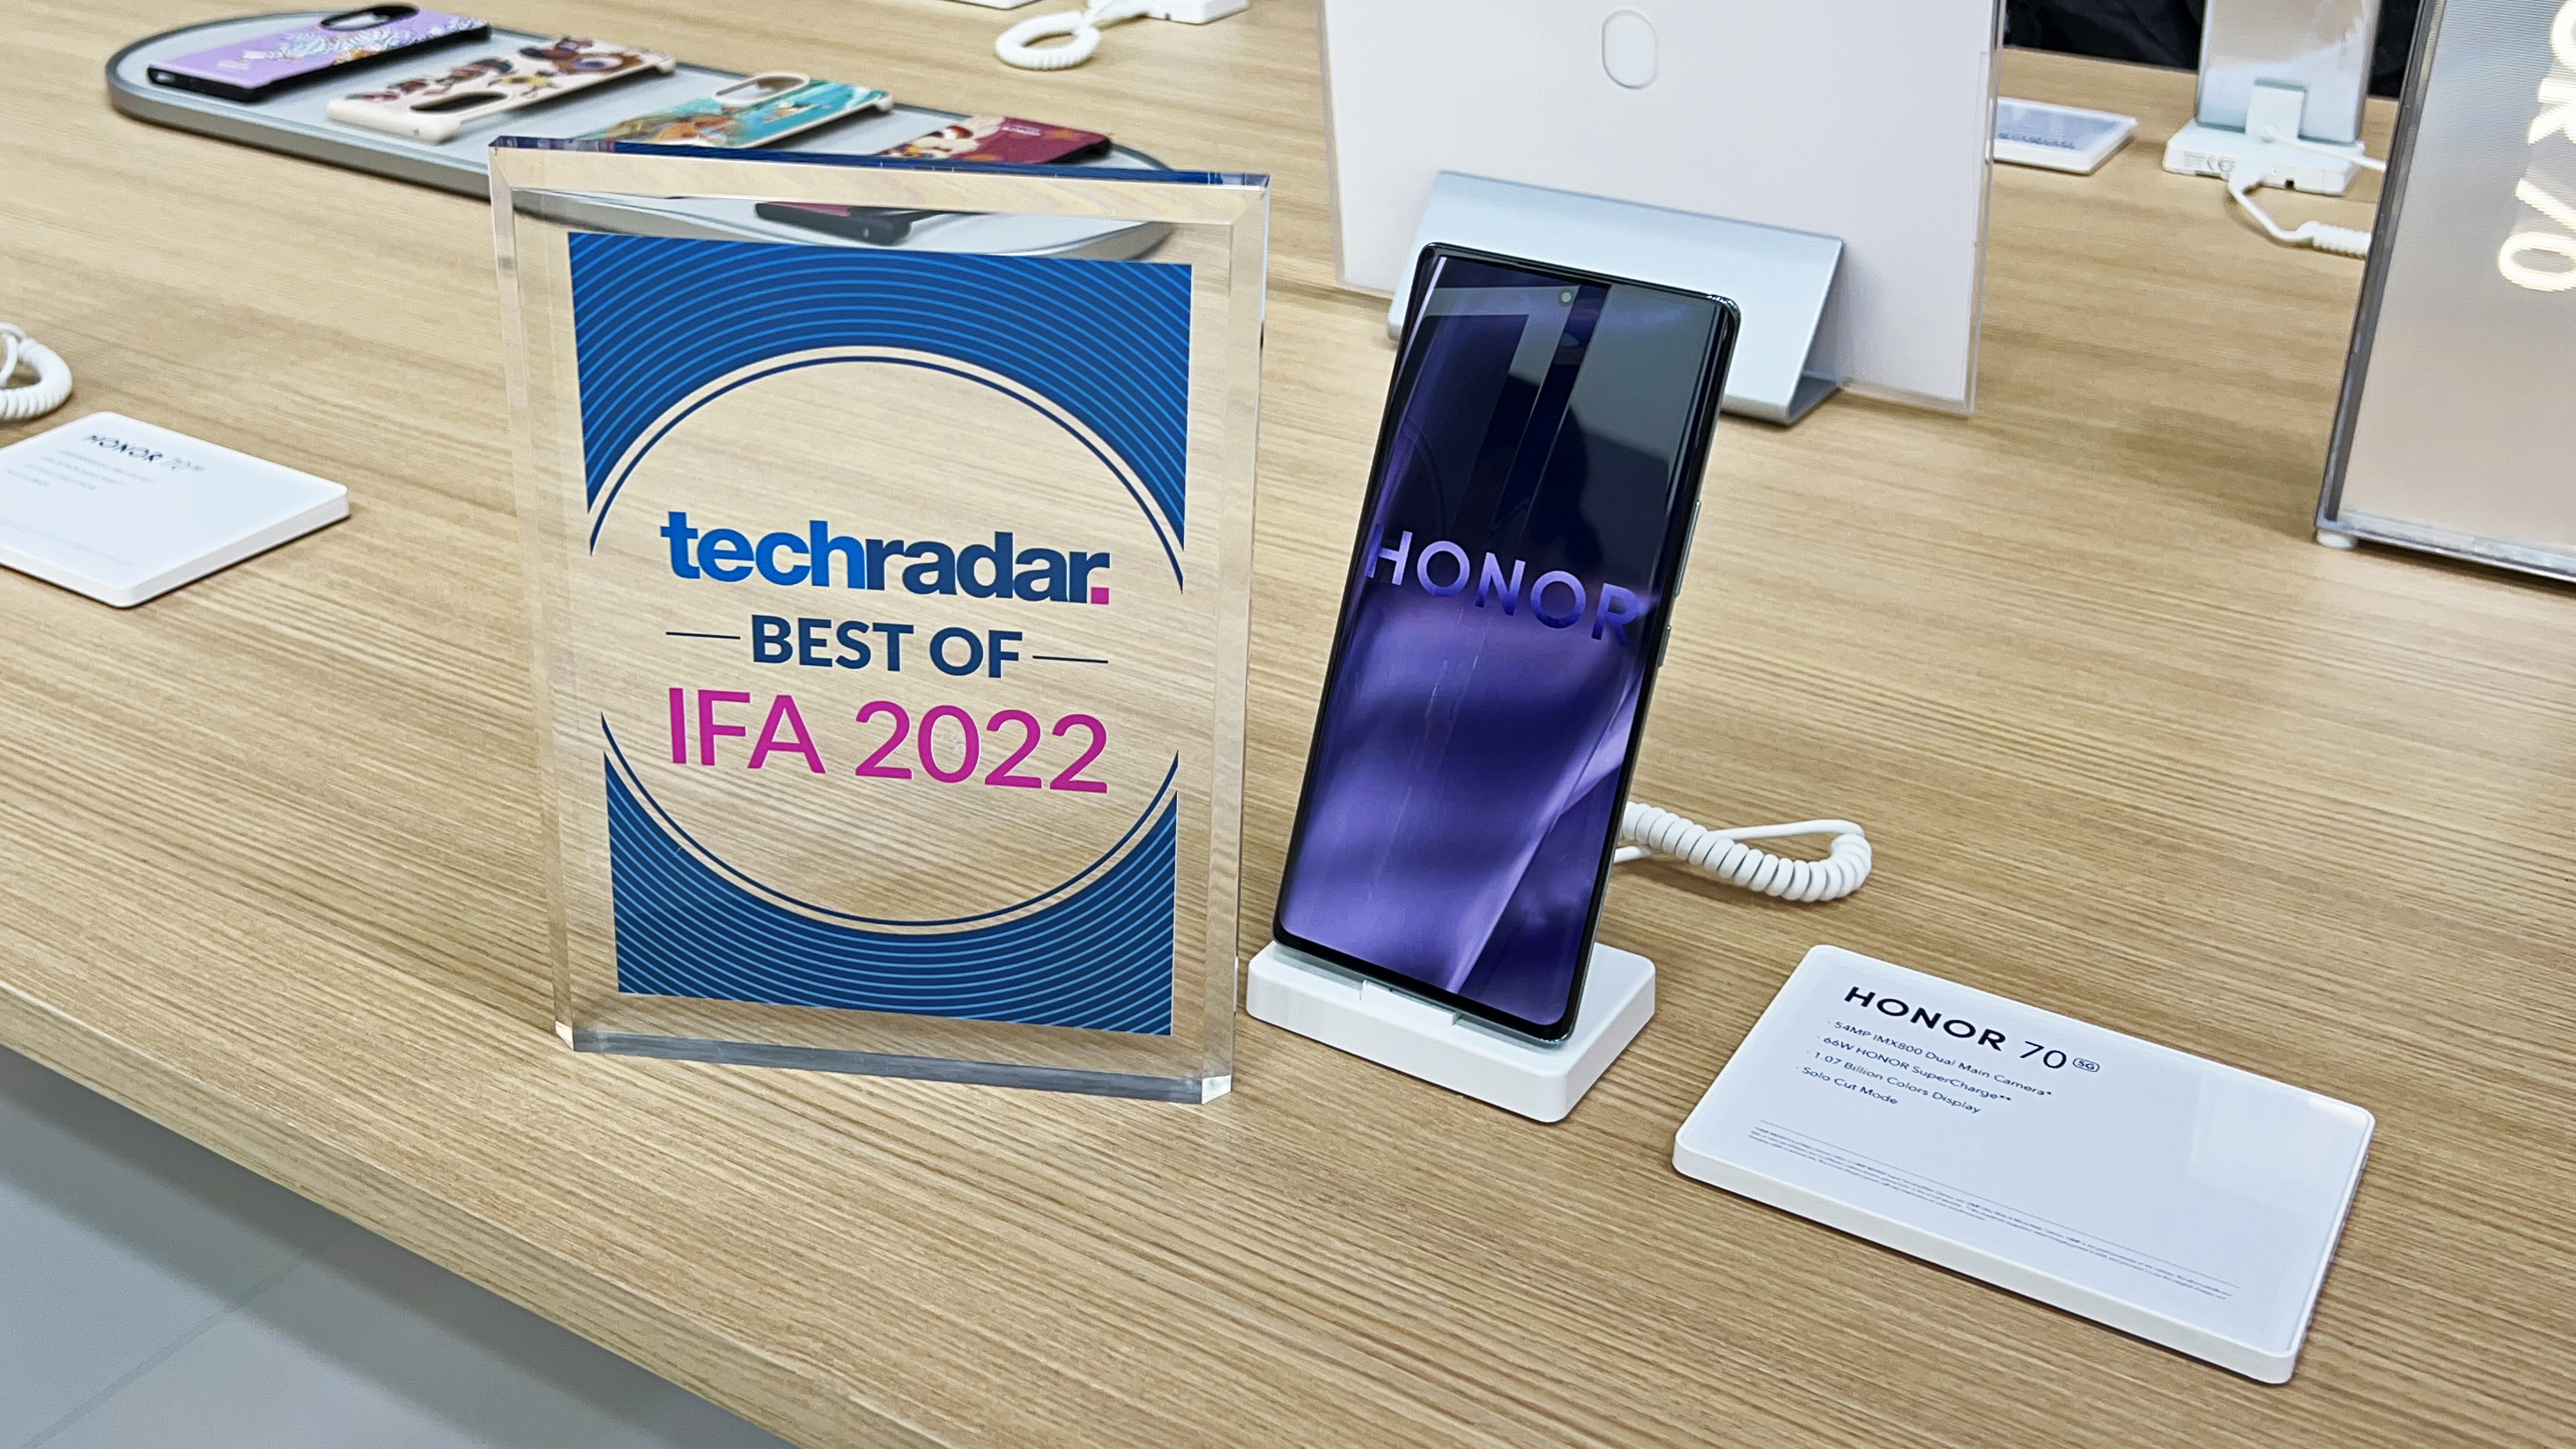 IFA 2022 award with Honor 70 phone.